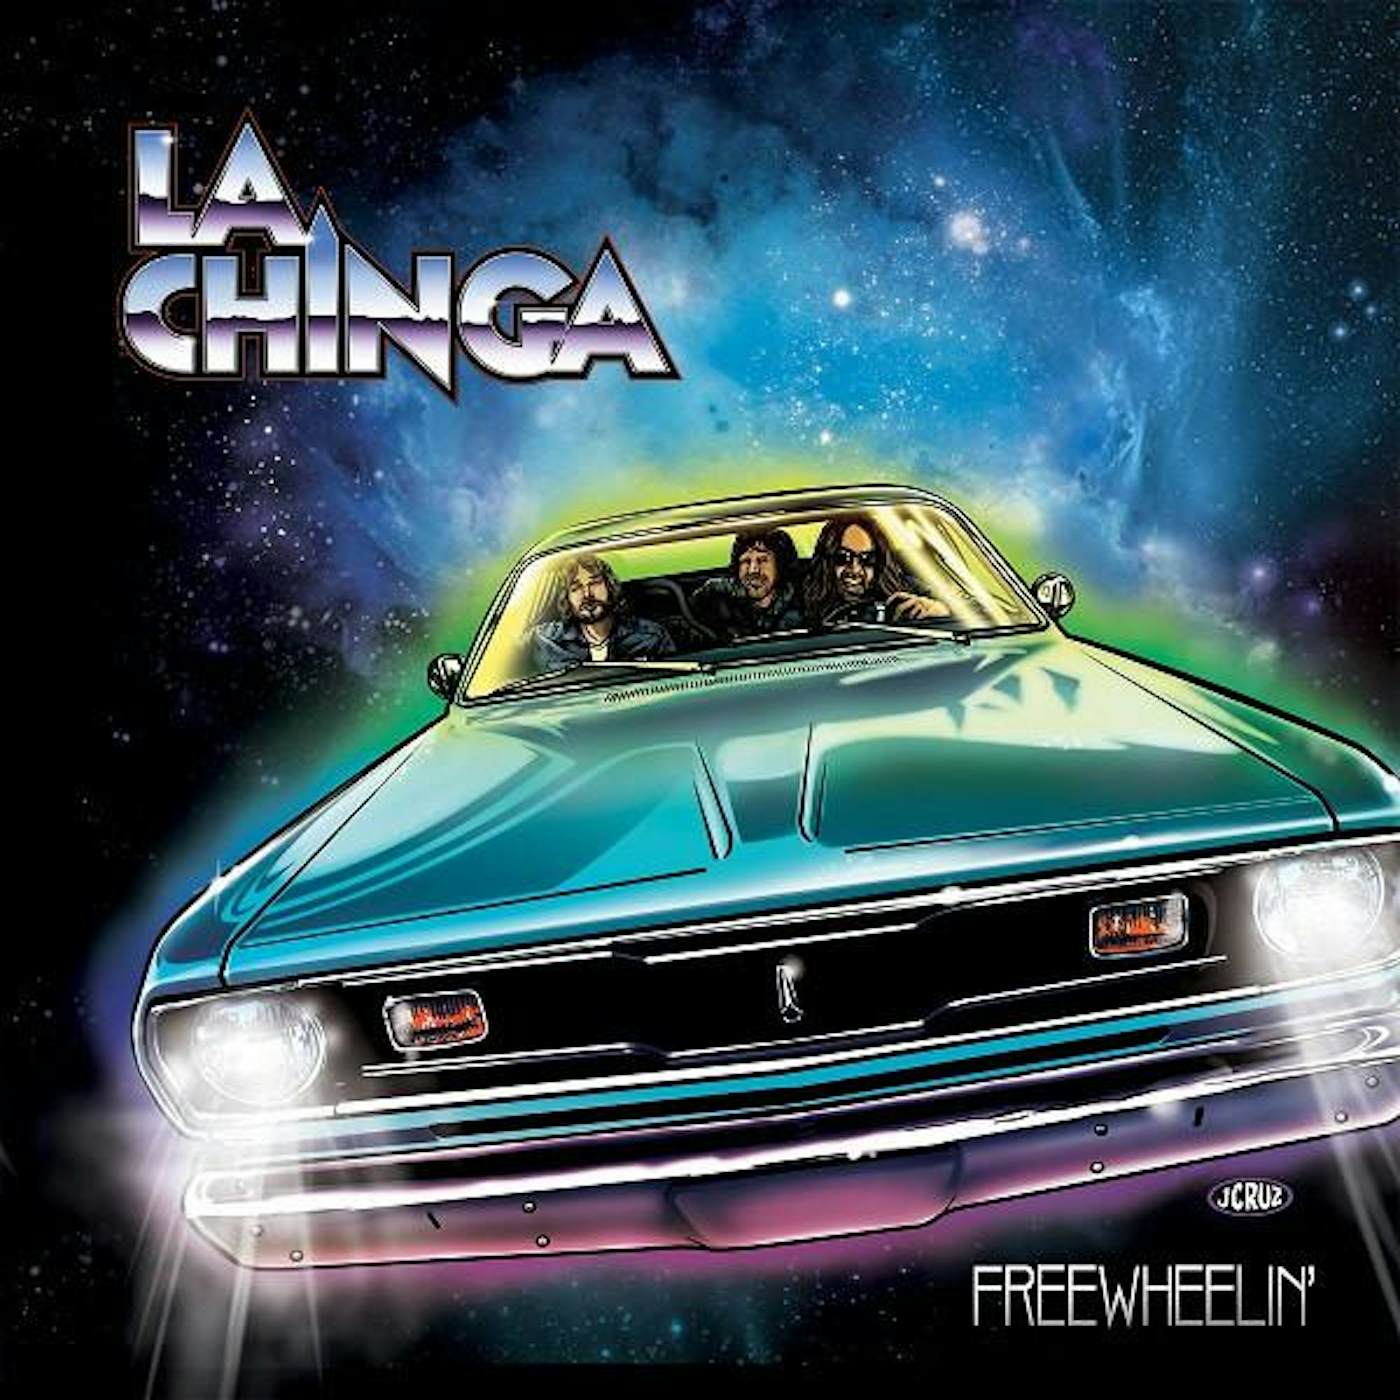 La Chinga FREEWHEELIN CD